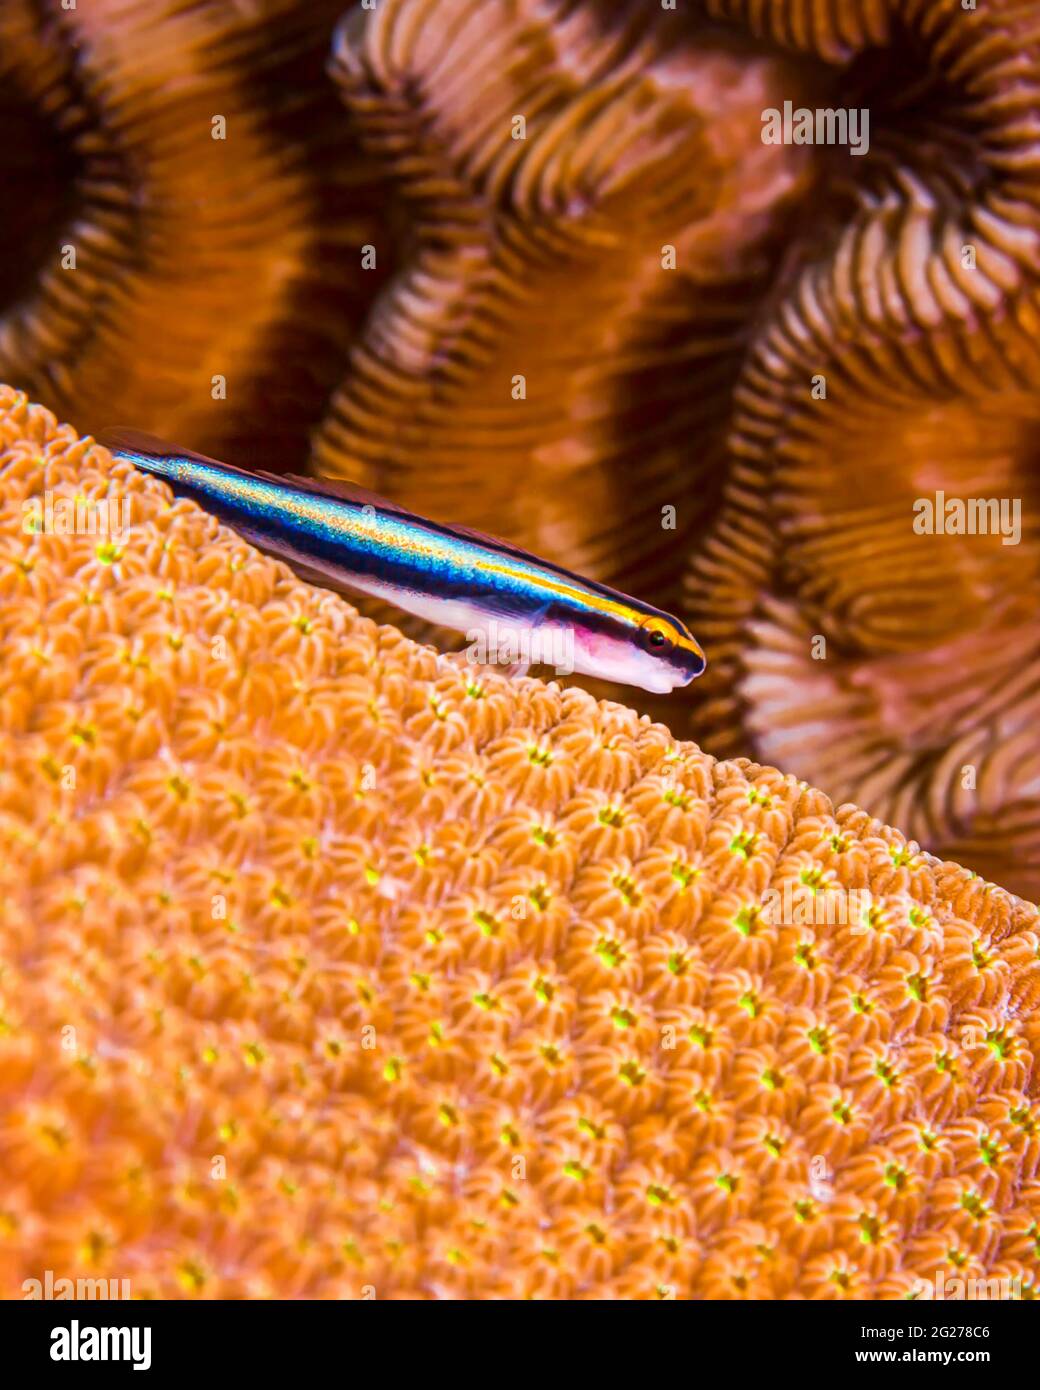 Goby dal naso giallo (Elacatinus randalli) siede su corallo matita giallo, Bonaire. Foto Stock